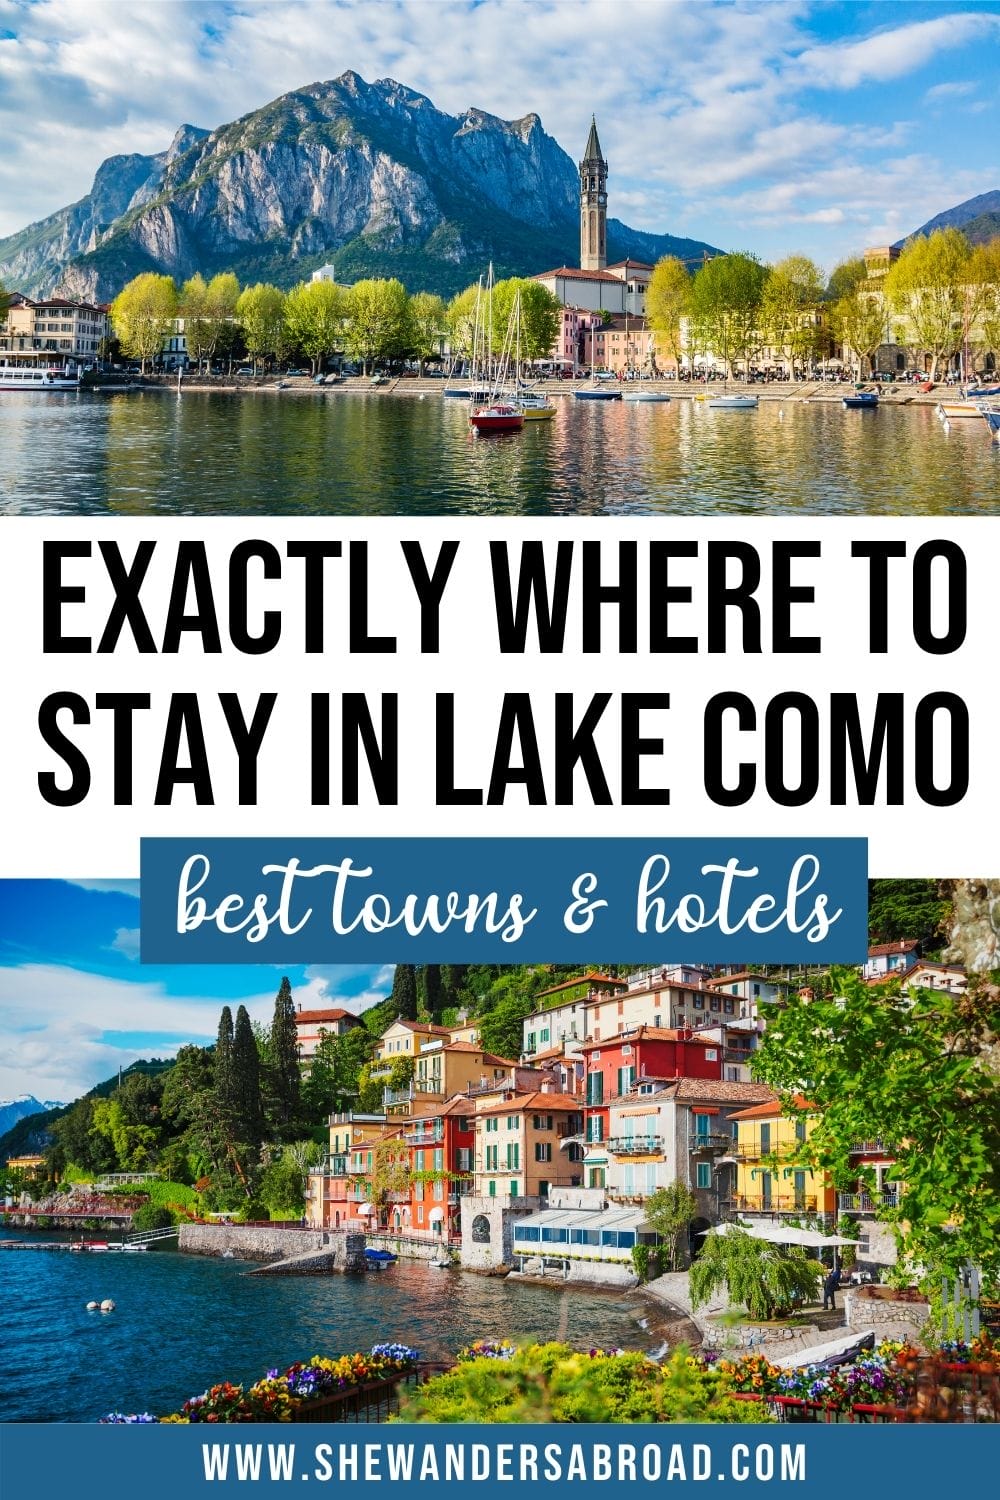 Comojärven Parhaat majoituspaikat: Best Towns Hotels